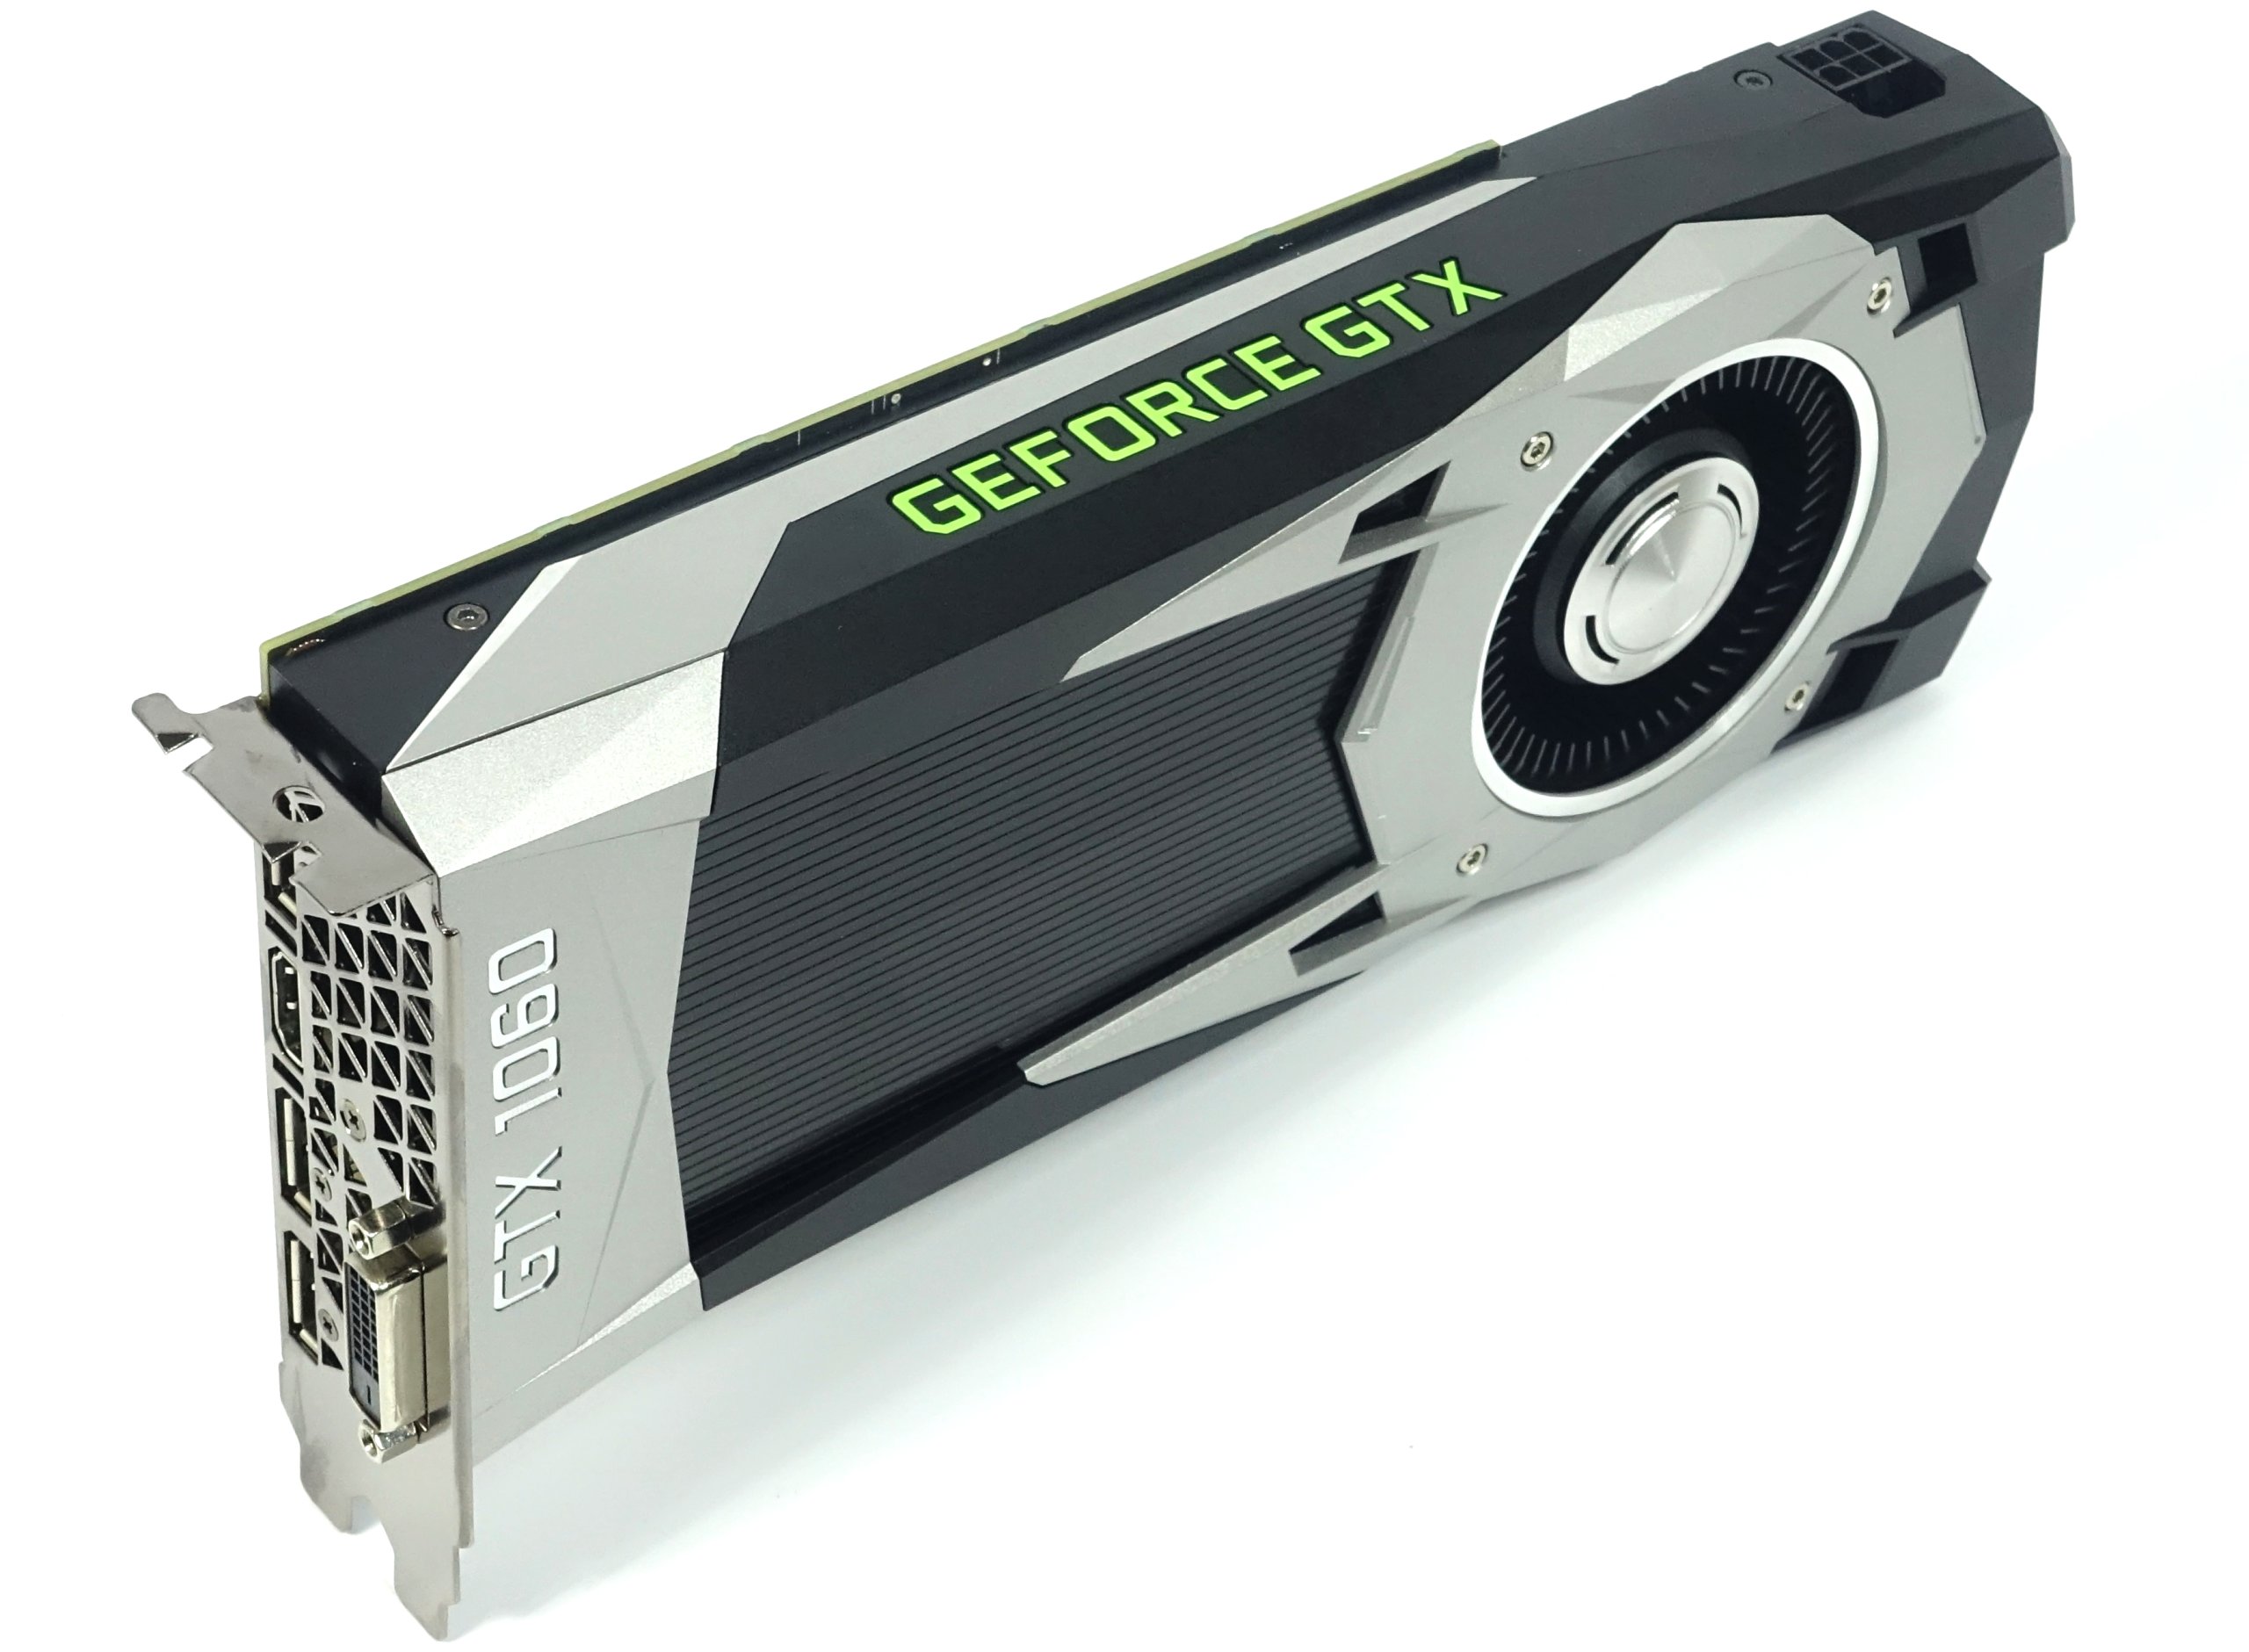 Nvidia Says GeForce GTX 1060 Will Outperform GTX 980, Founders 